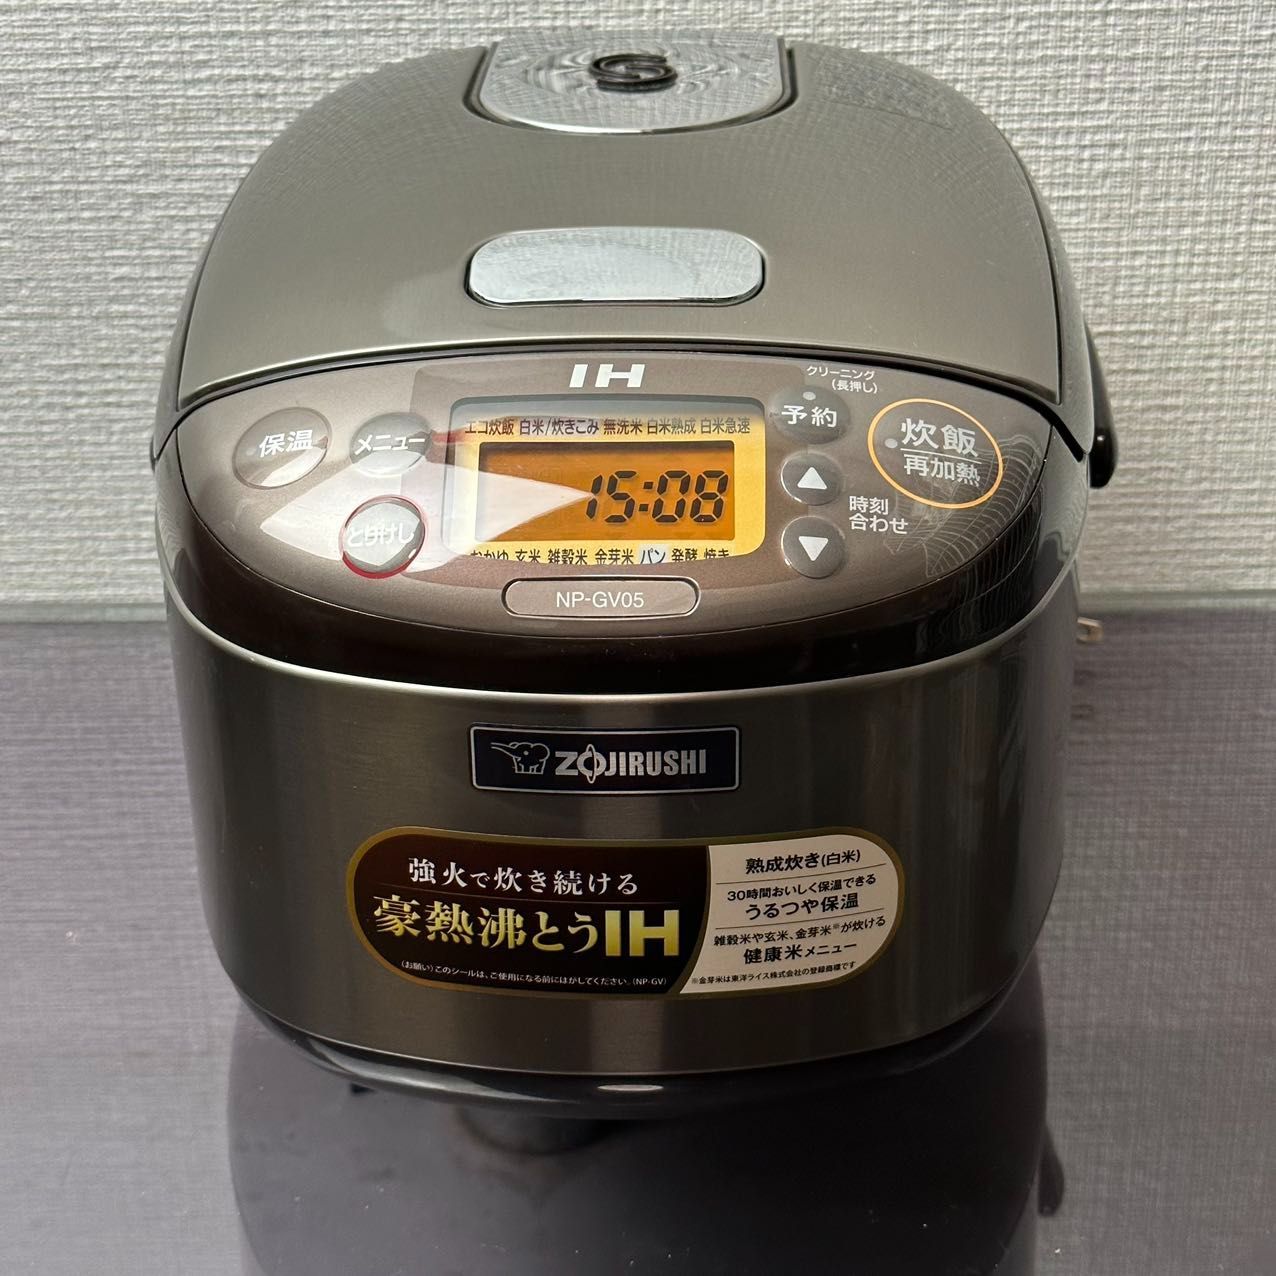 ZOJIRUSHI 炊飯器 3合炊き - 炊飯器・餅つき機